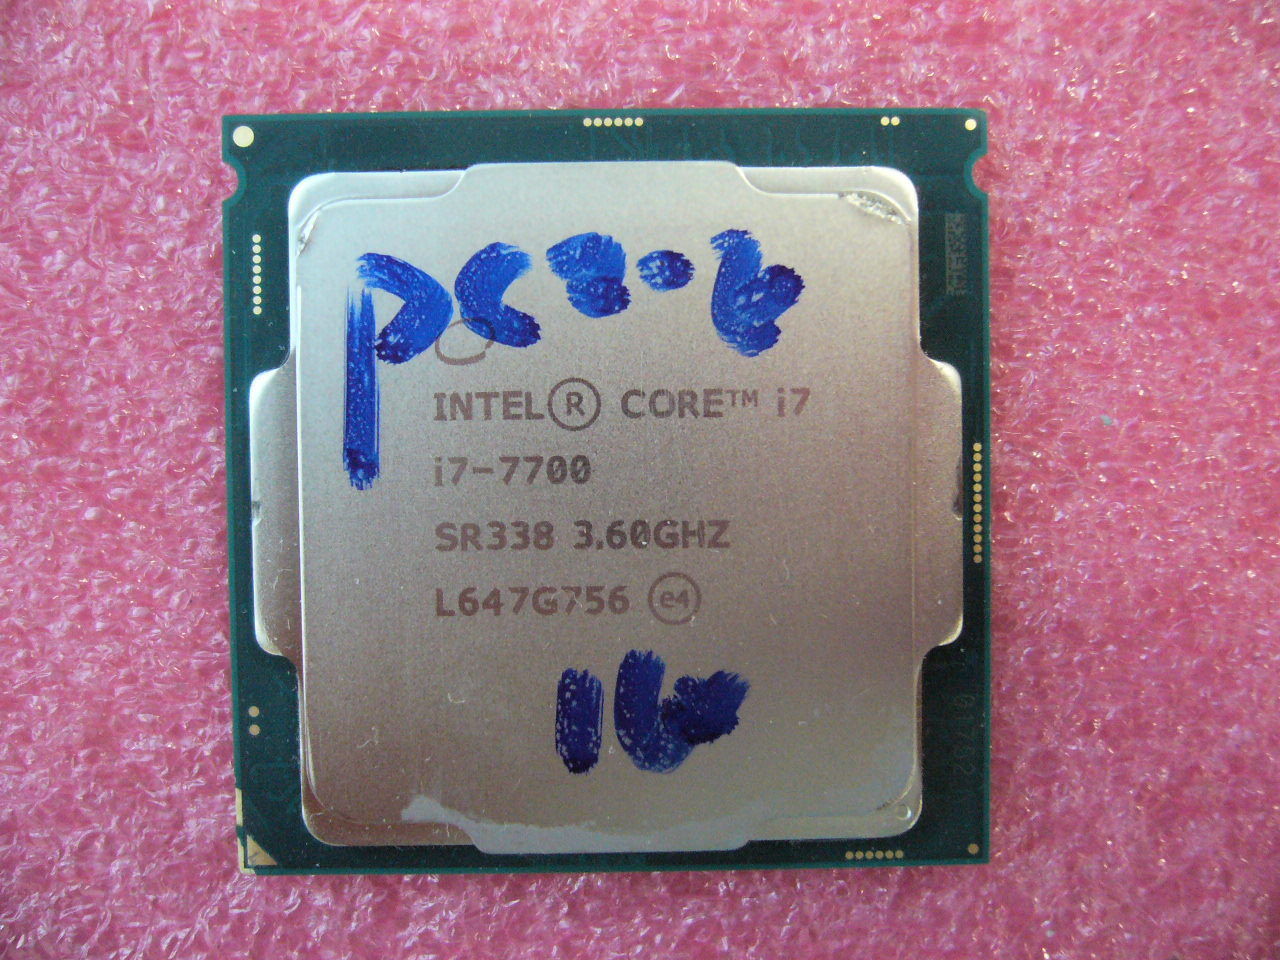 QTY 1x Intel CPU i7-7700 Quad-Cores 3.6Ghz 8MB LGA1151 SR338 PCIE 16x slot not w